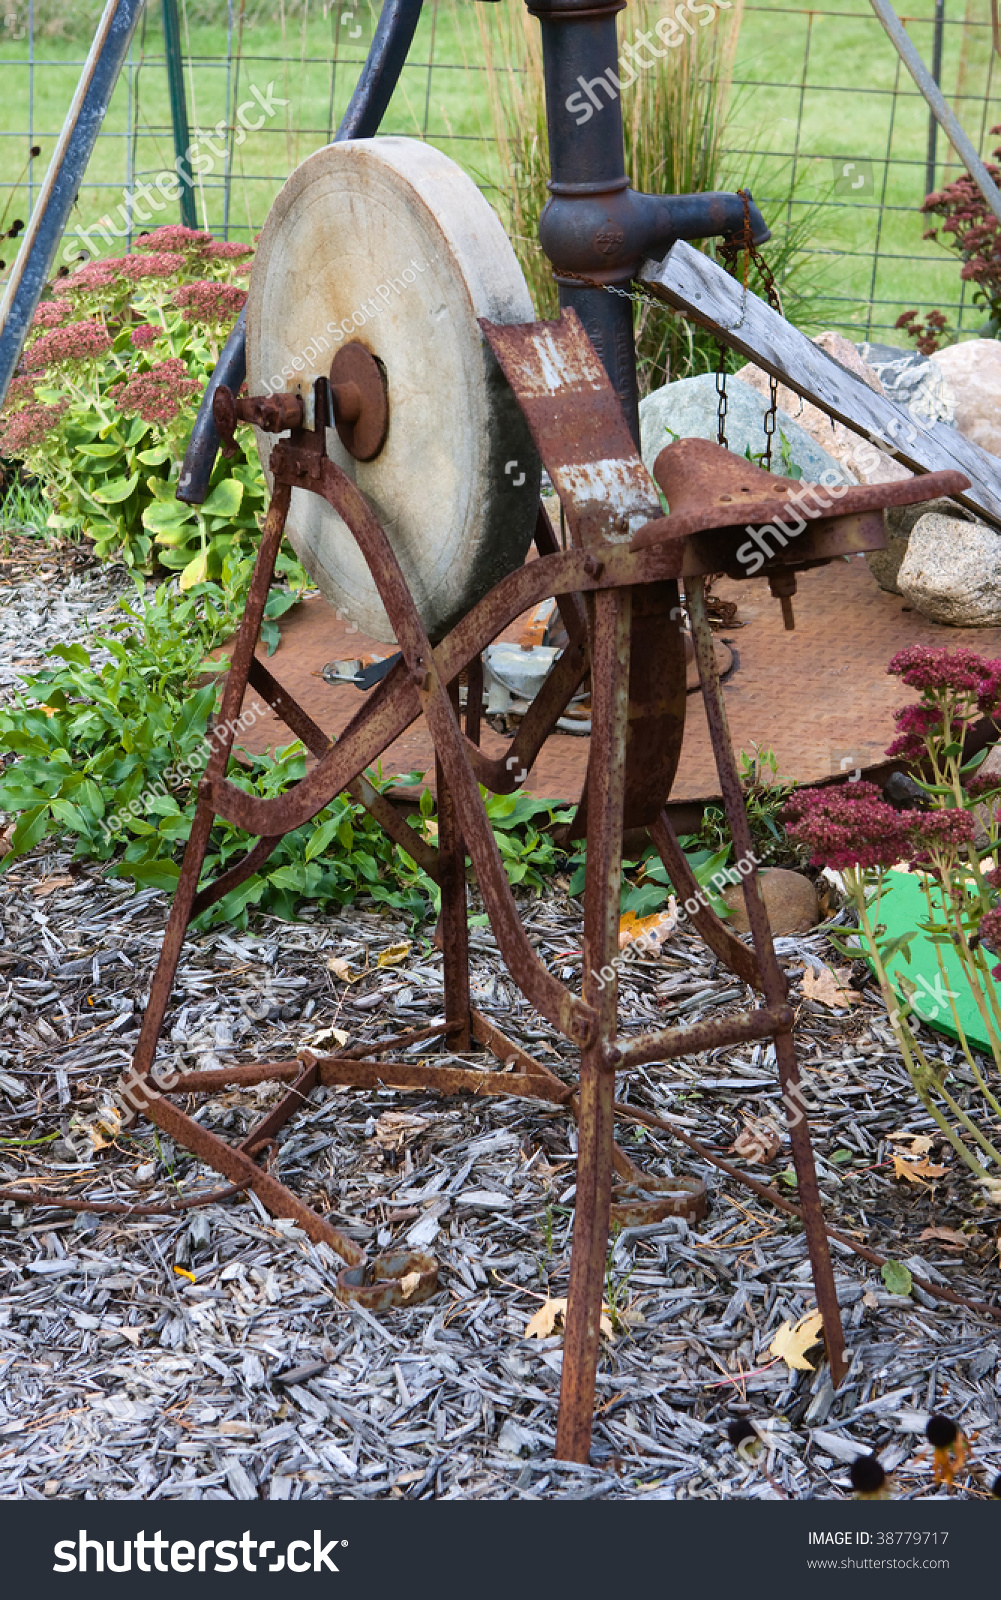 http://image.shutterstock.com/z/stock-photo-an-antique-sit-down-grinding-wheel-sharpening-stone-38779717.jpg